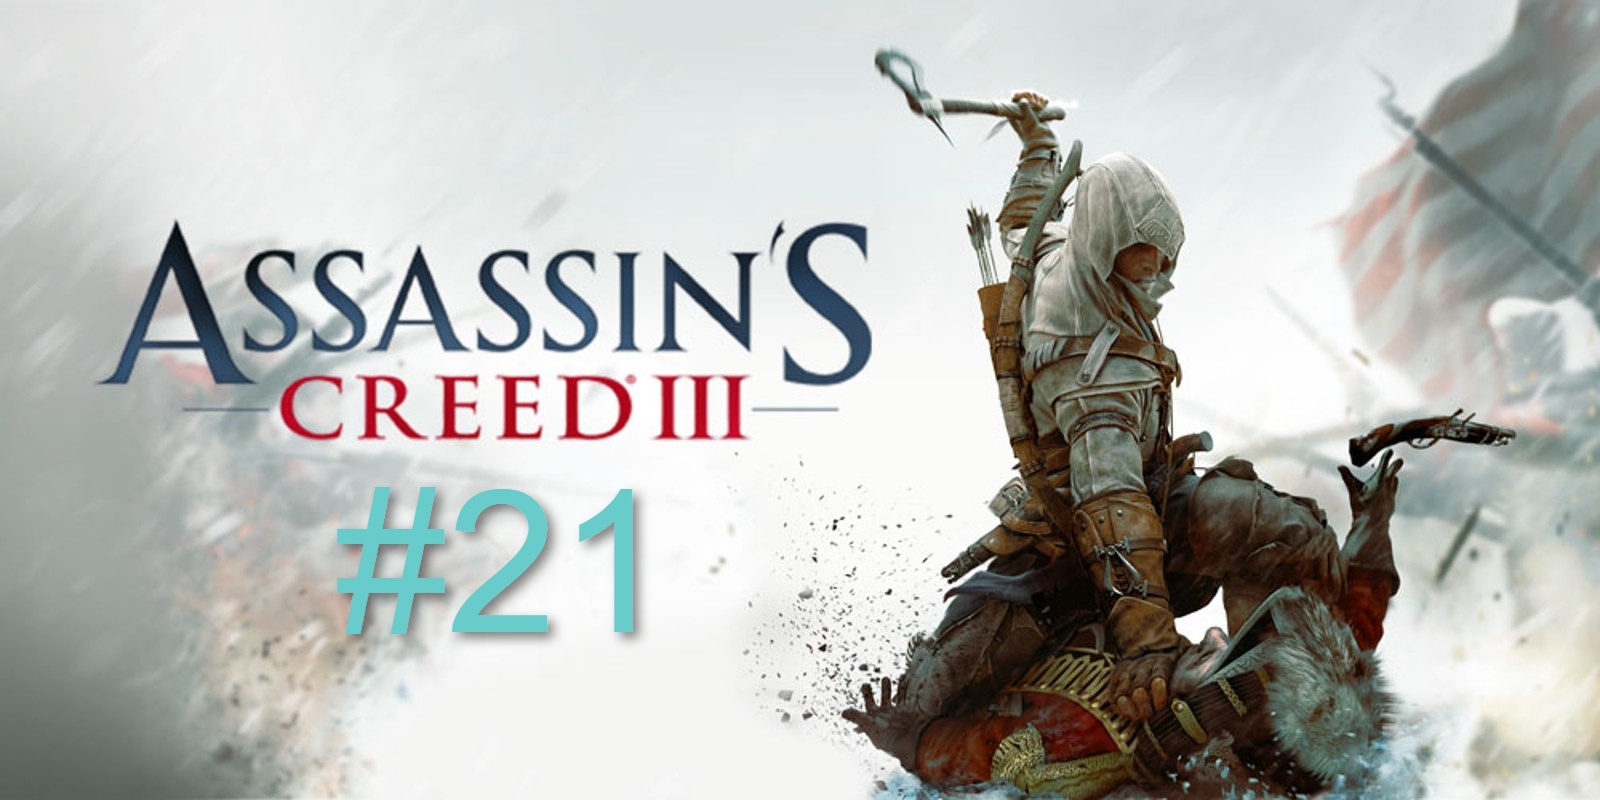 Assassin’s Creed III #21 Морской бой